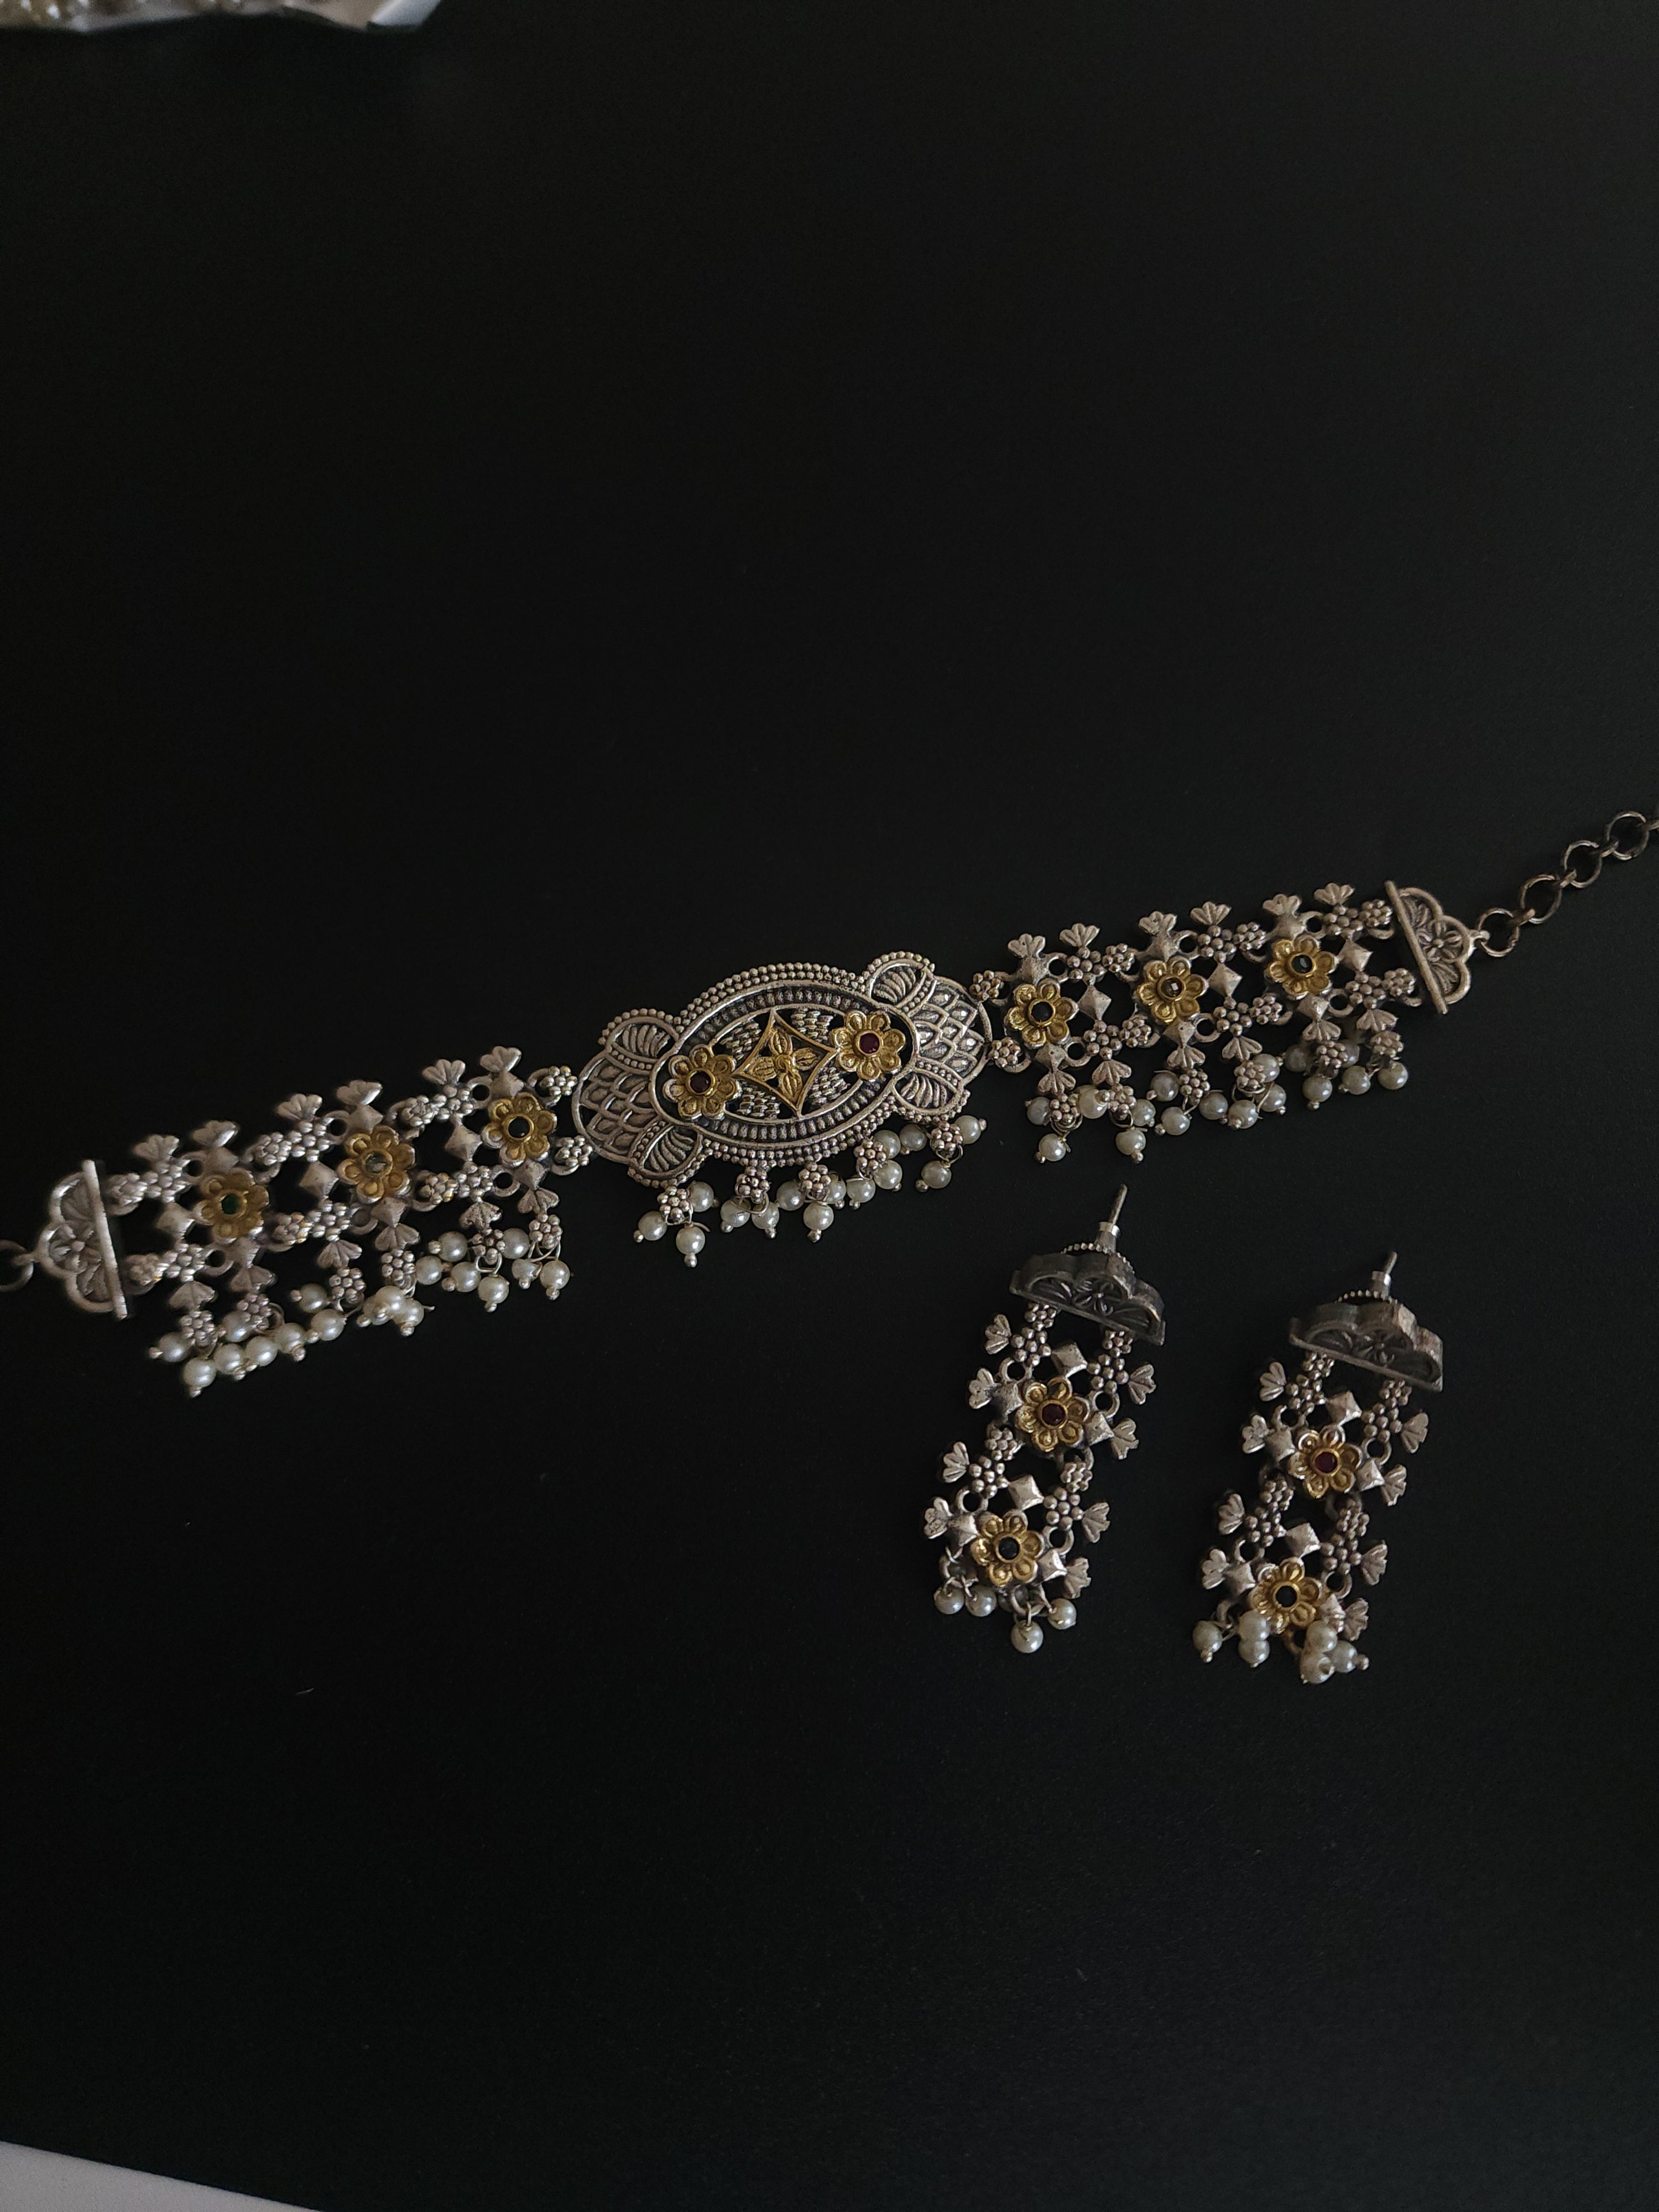 Alicia dualtone necklace set